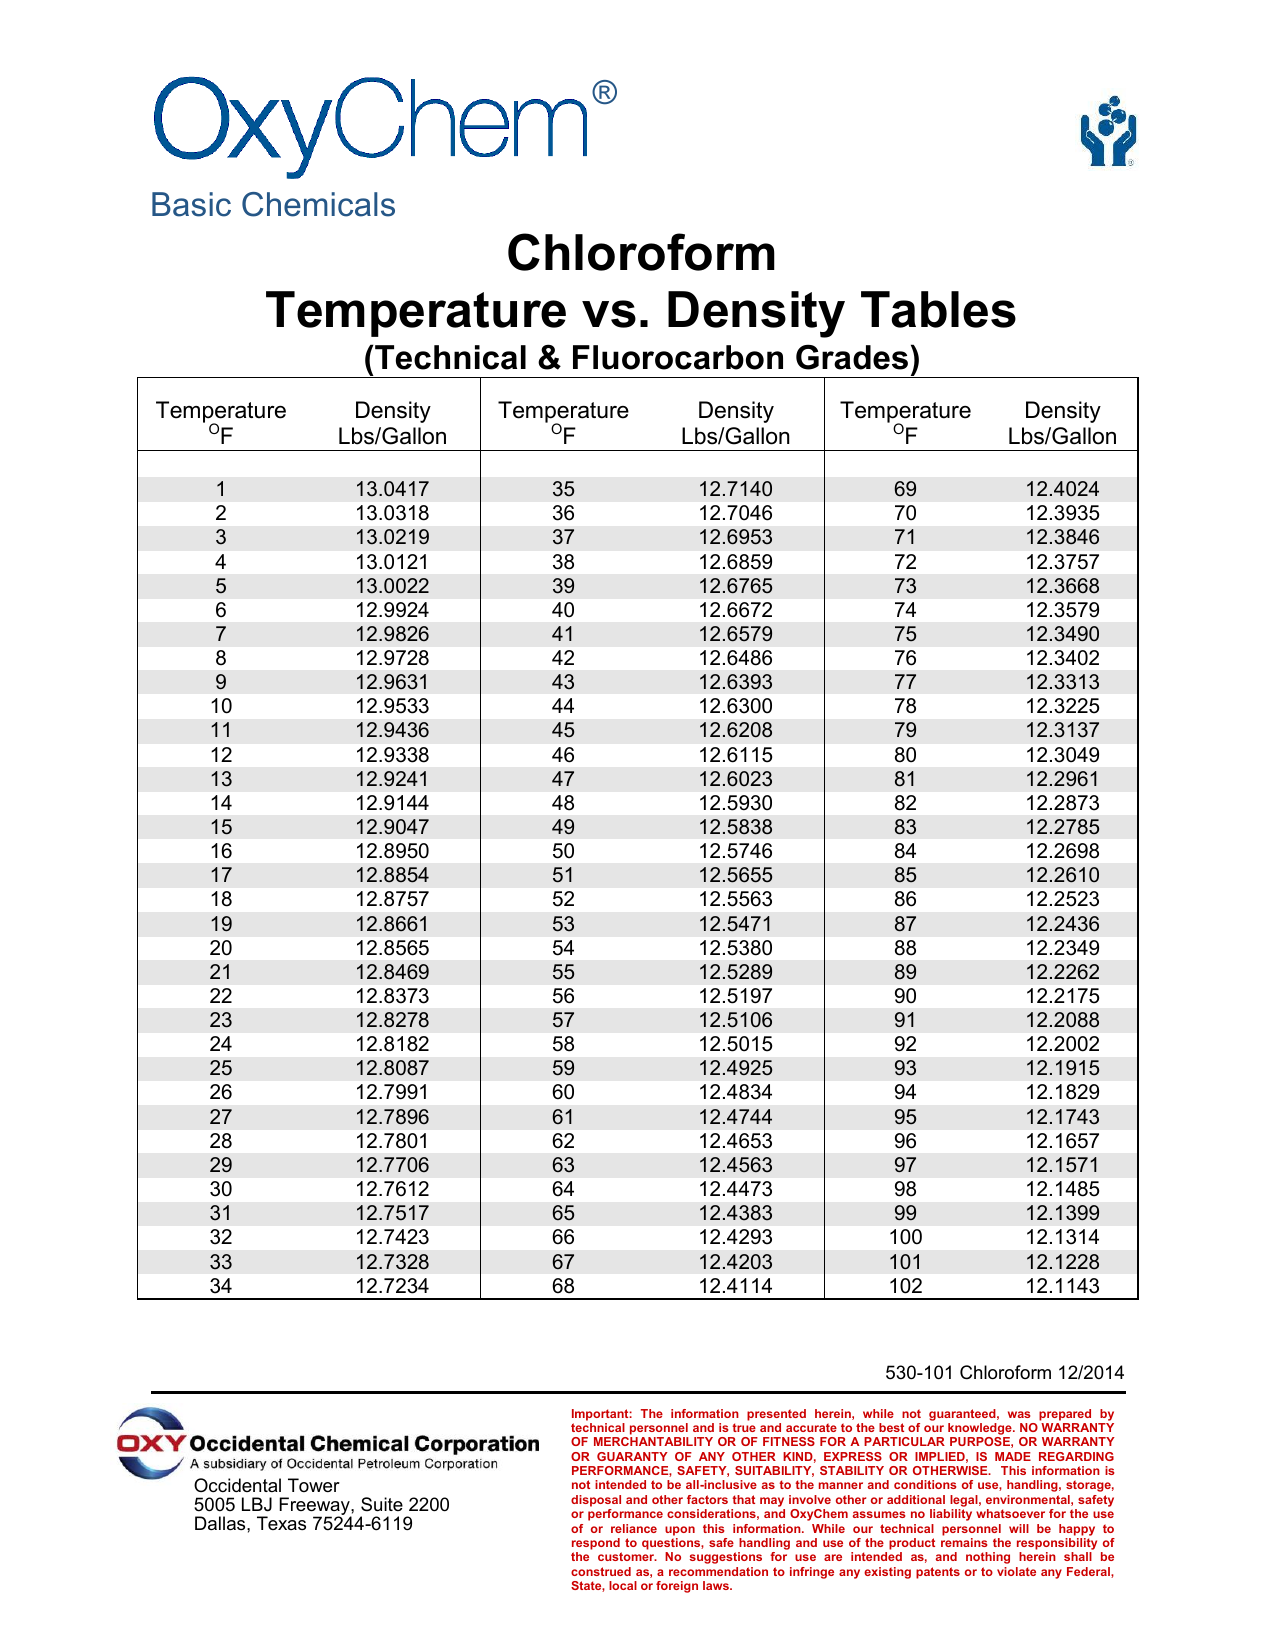 Basic Temperature Chart